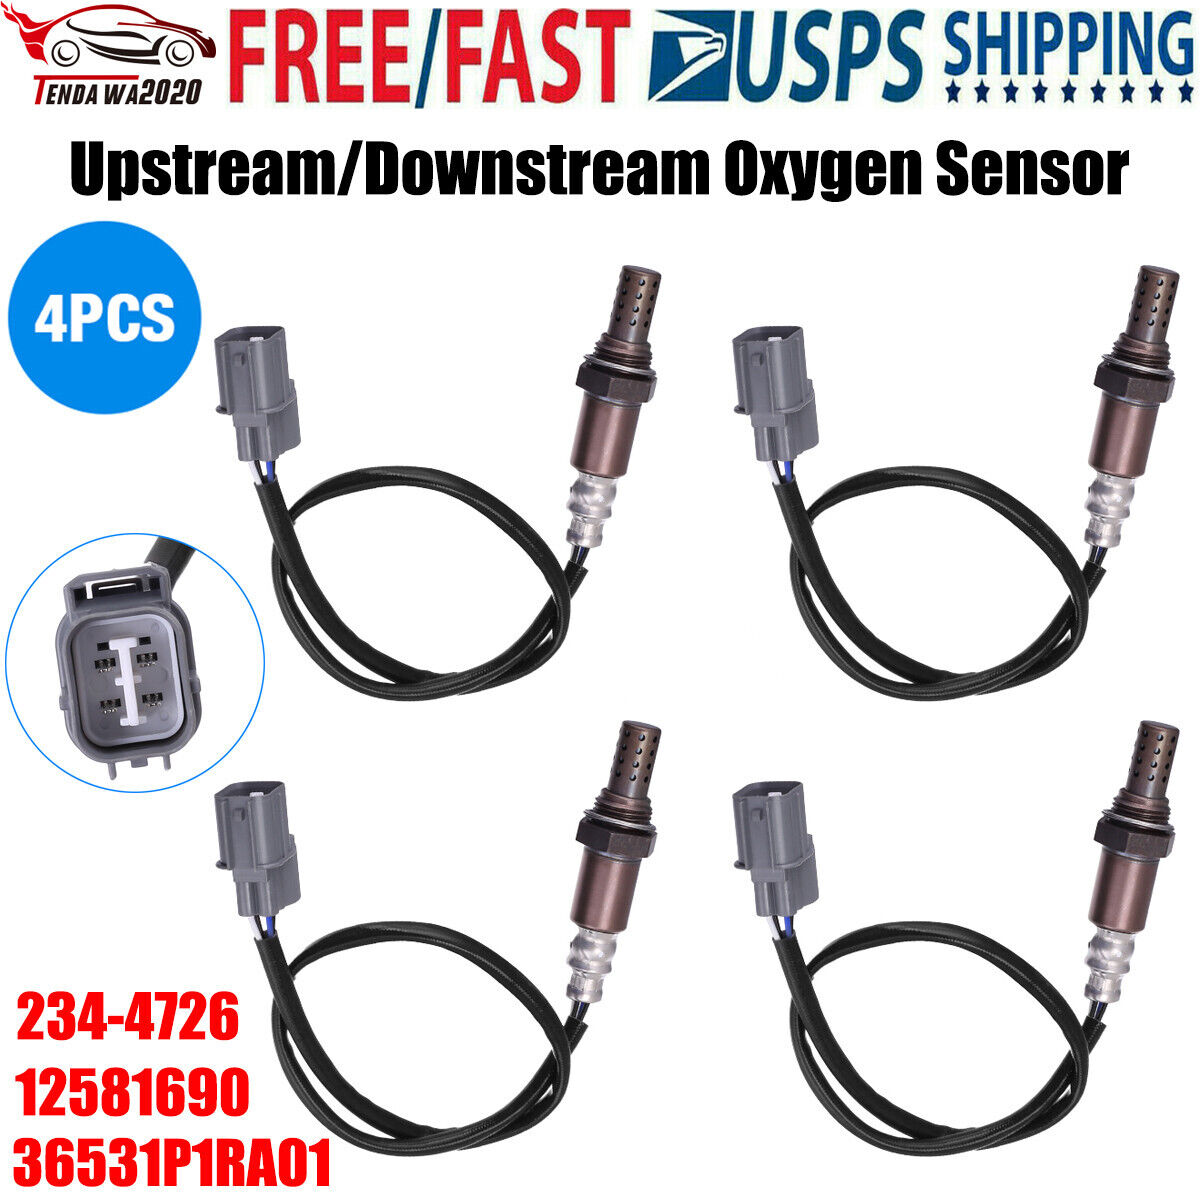 4Pcs Upstream/Downstream O2 Oxygen Sensor for  Acura TL RL Honda Accord Odyssey